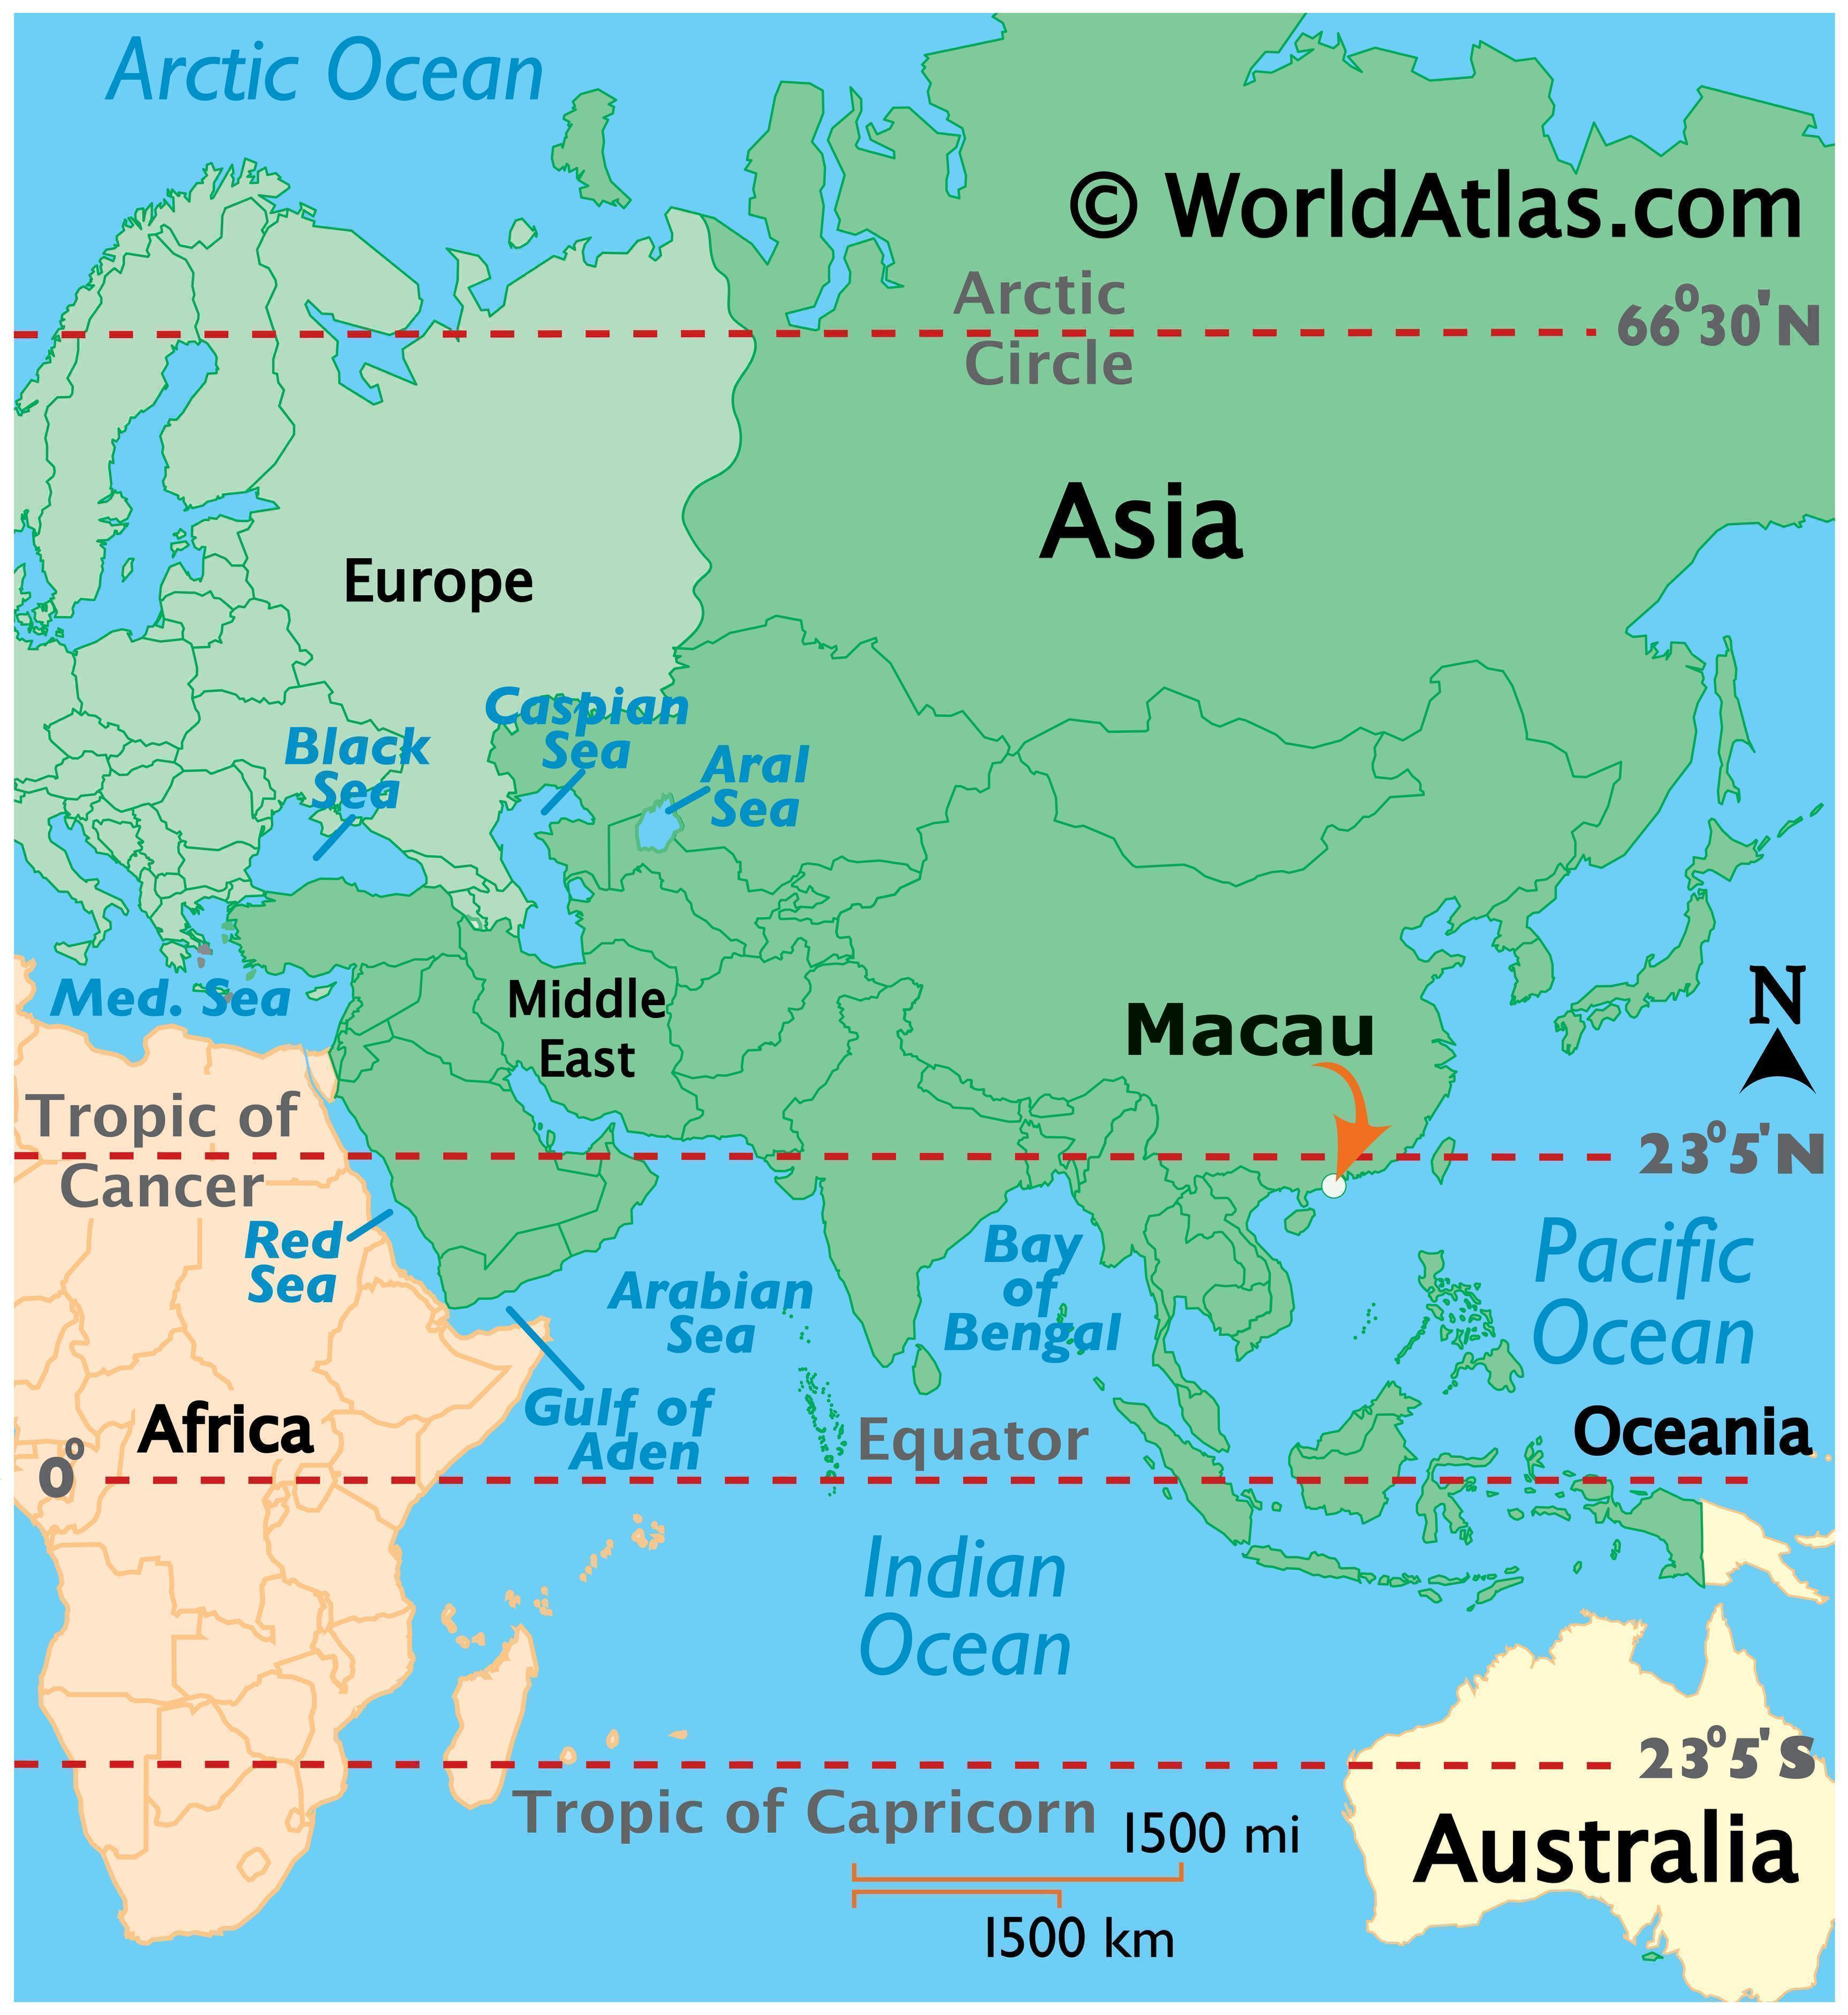 macao karta Macau Map / Geography of Macau / Map of Macau   Worldatlas.com macao karta